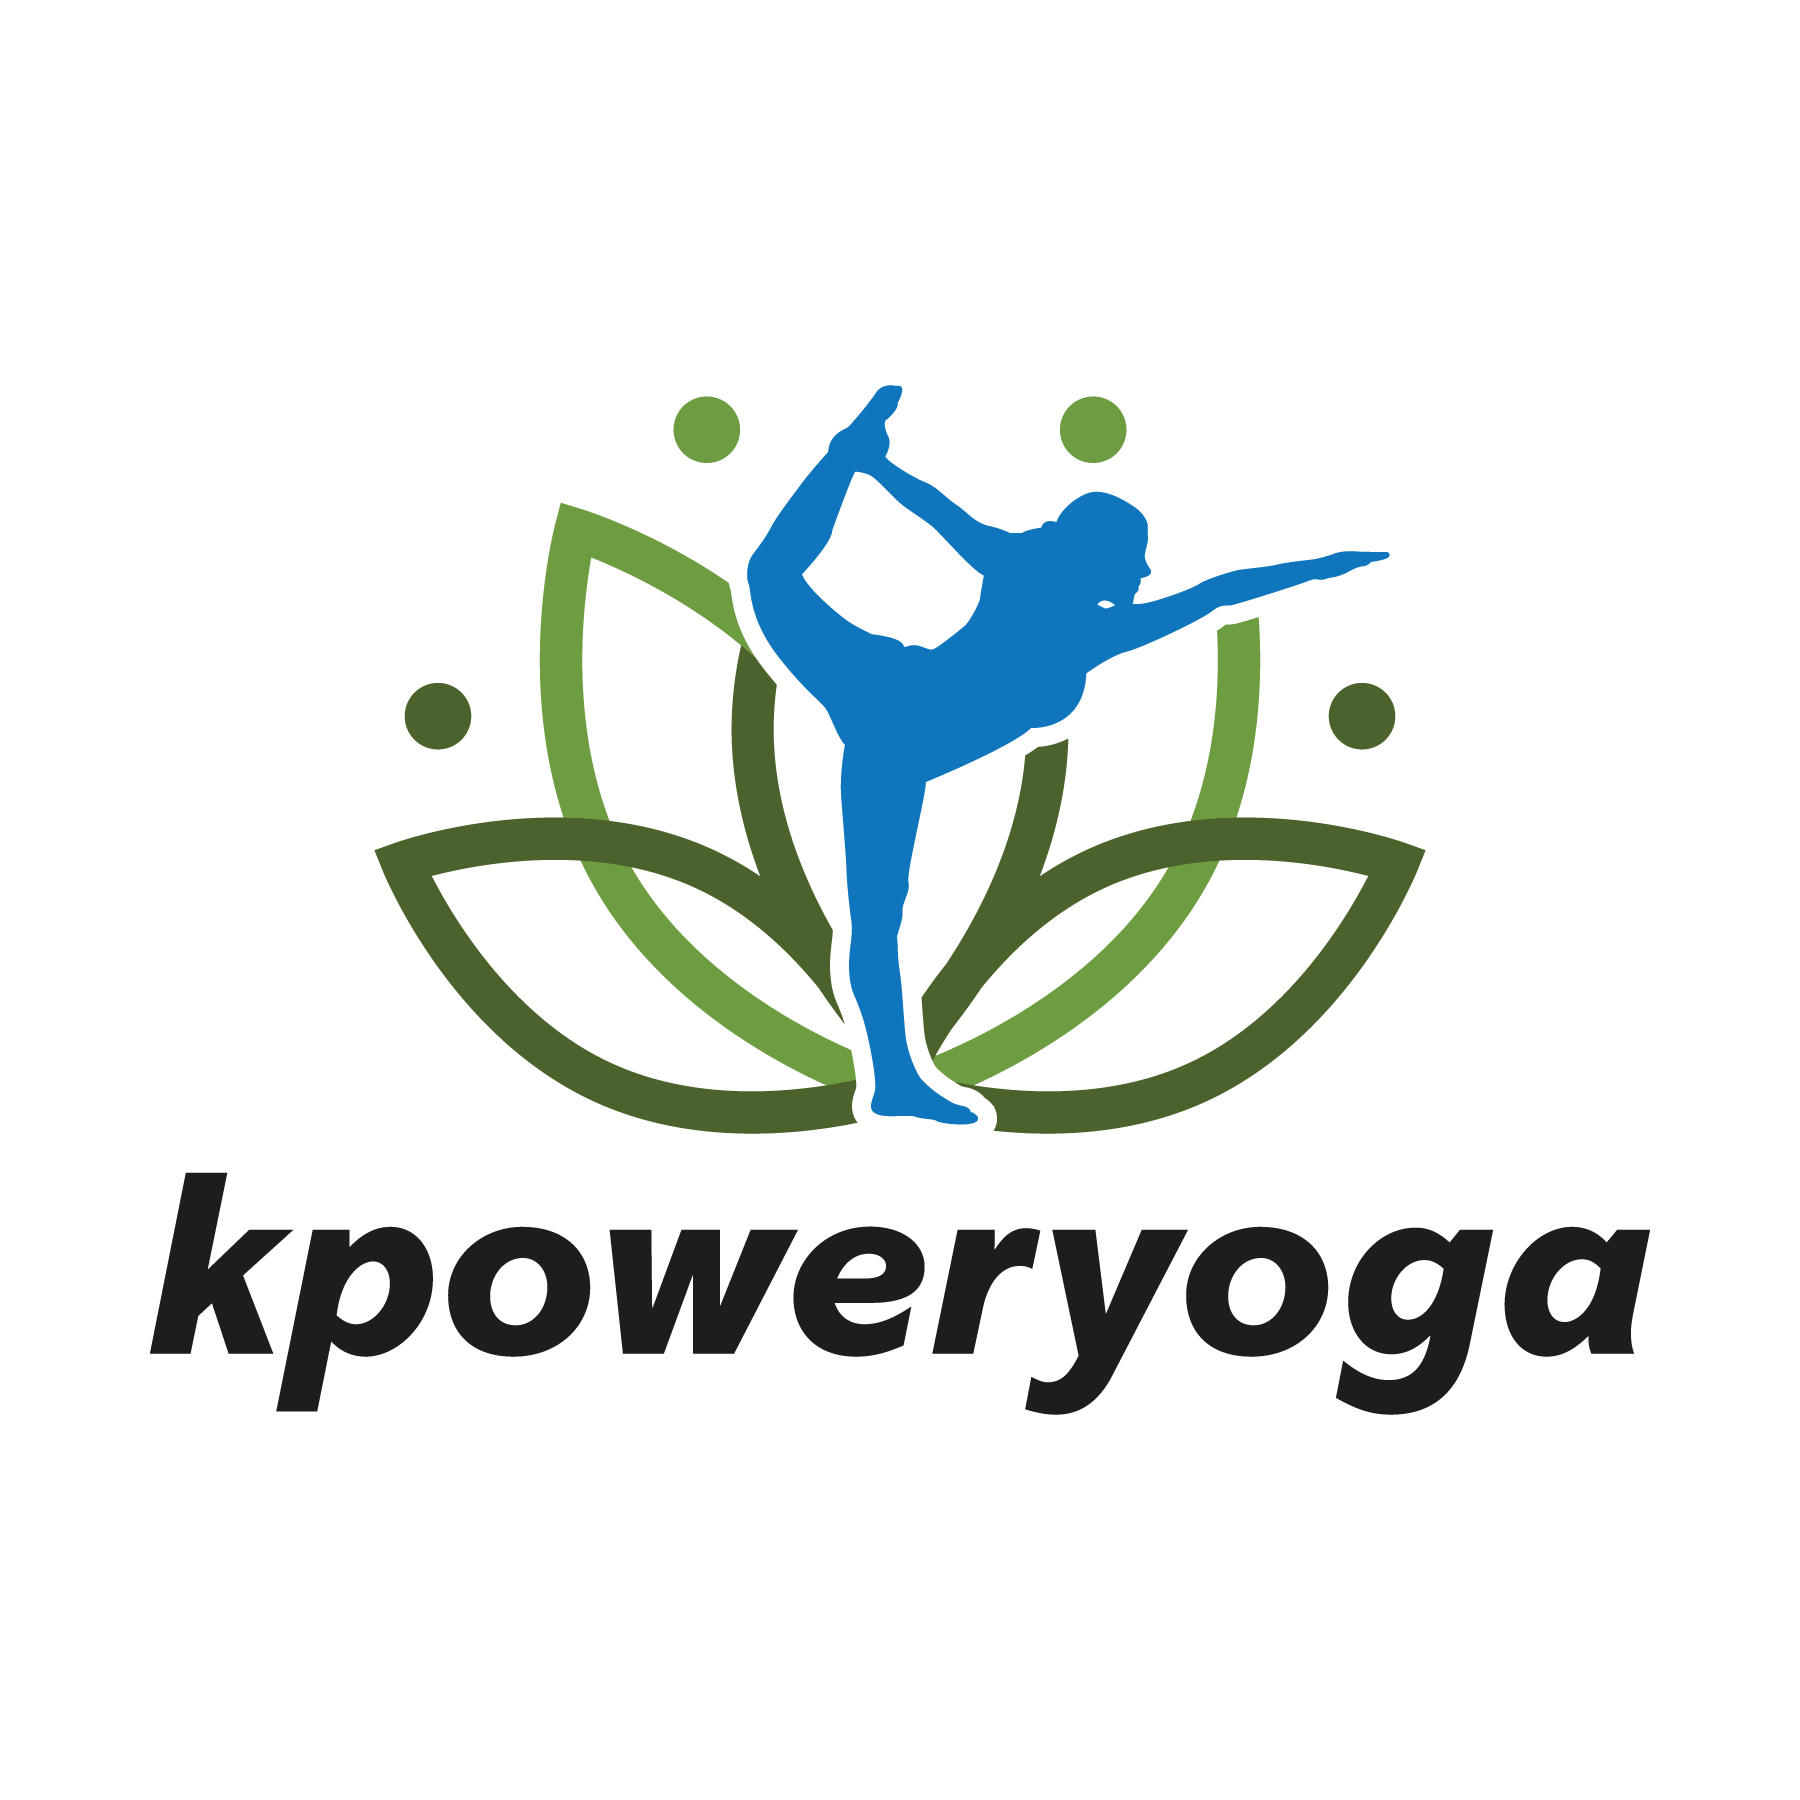 kpoweryoga | in person, on-demand and livestream yoga | Edmonton, AB, Canada